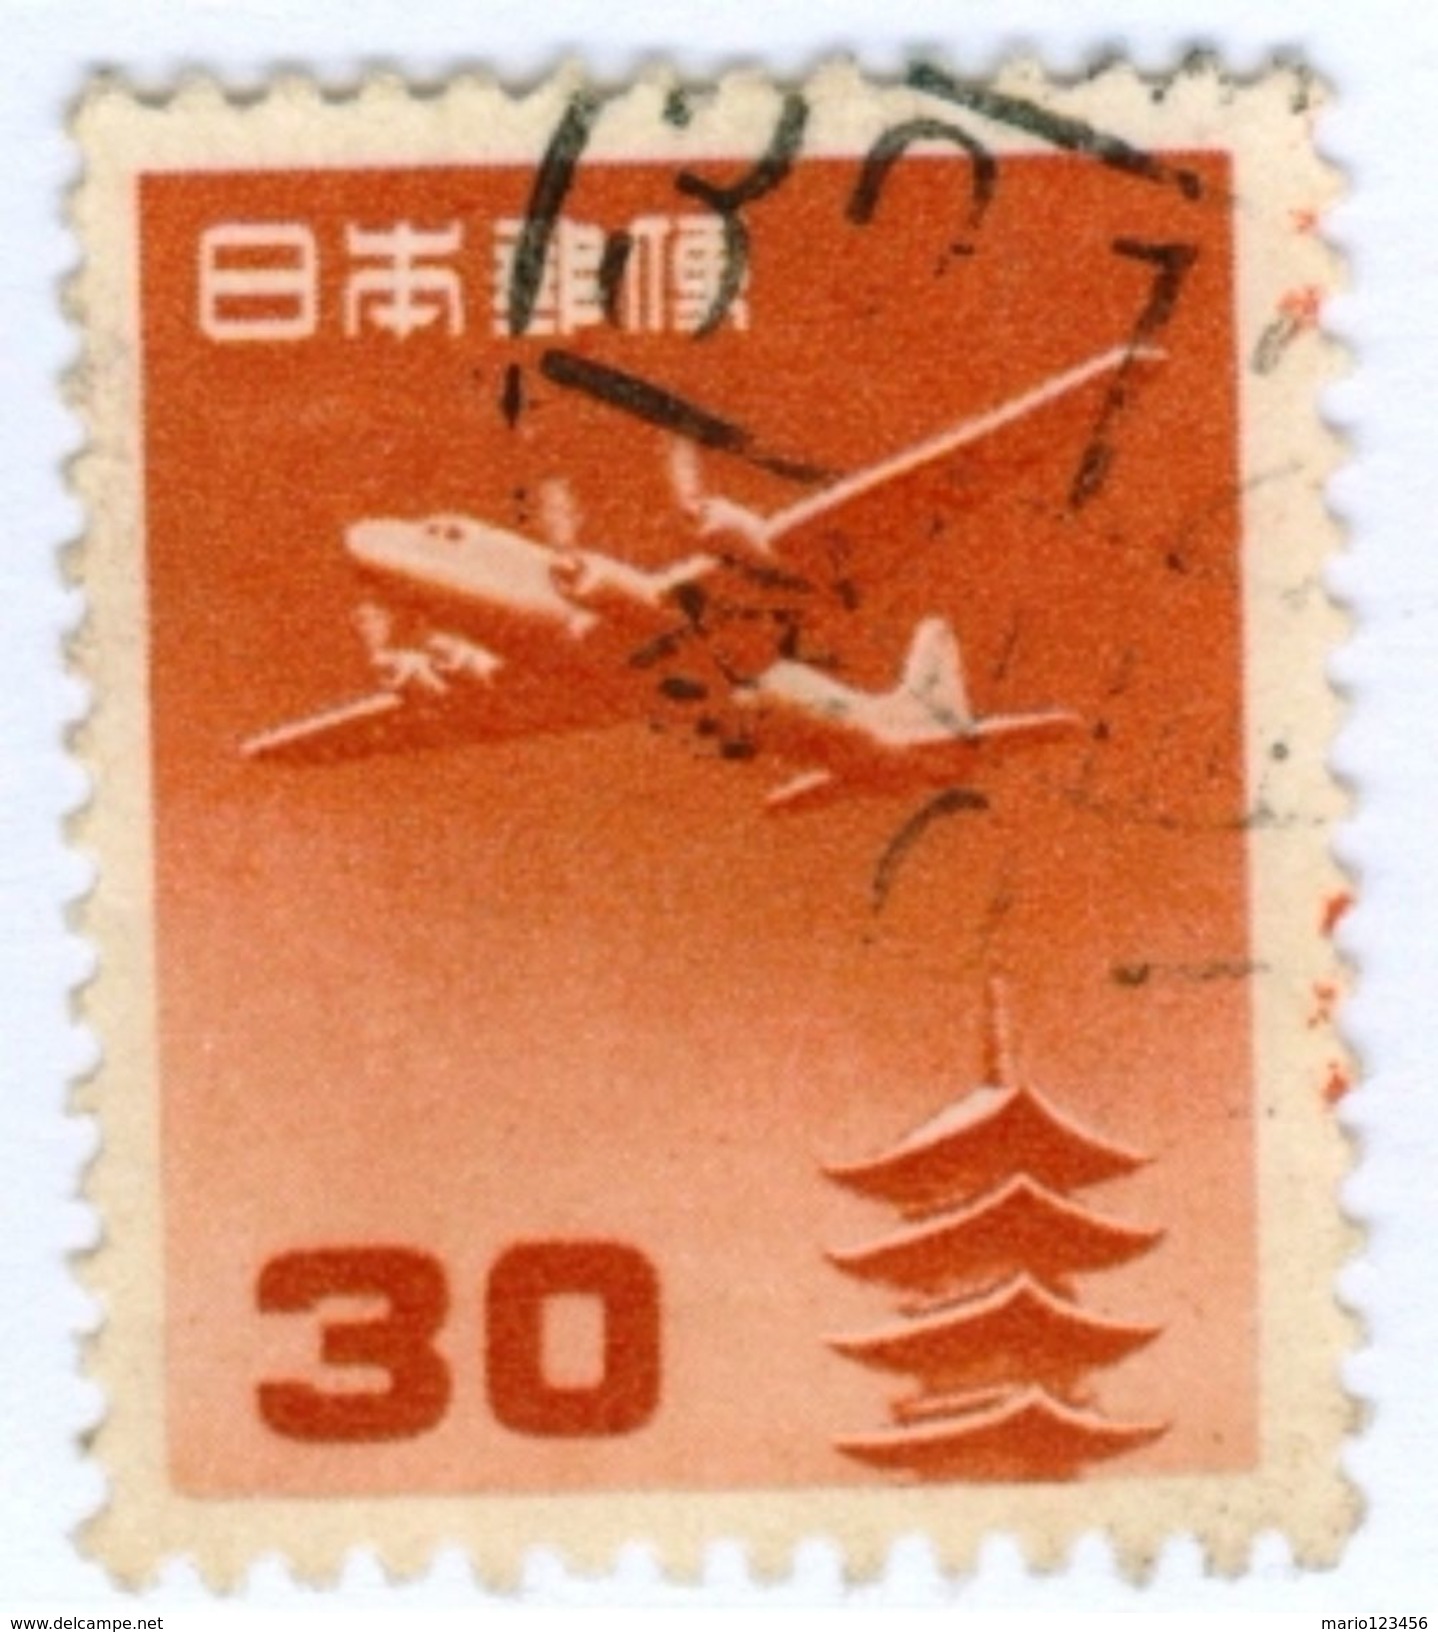 GIAPPONE, JAPAN, POSTA AEREA, AIRMAIL, PAGODE, 1951, FRANCOBOLLI USATI Yvert Tellier PA15   Scott C17 - Airmail